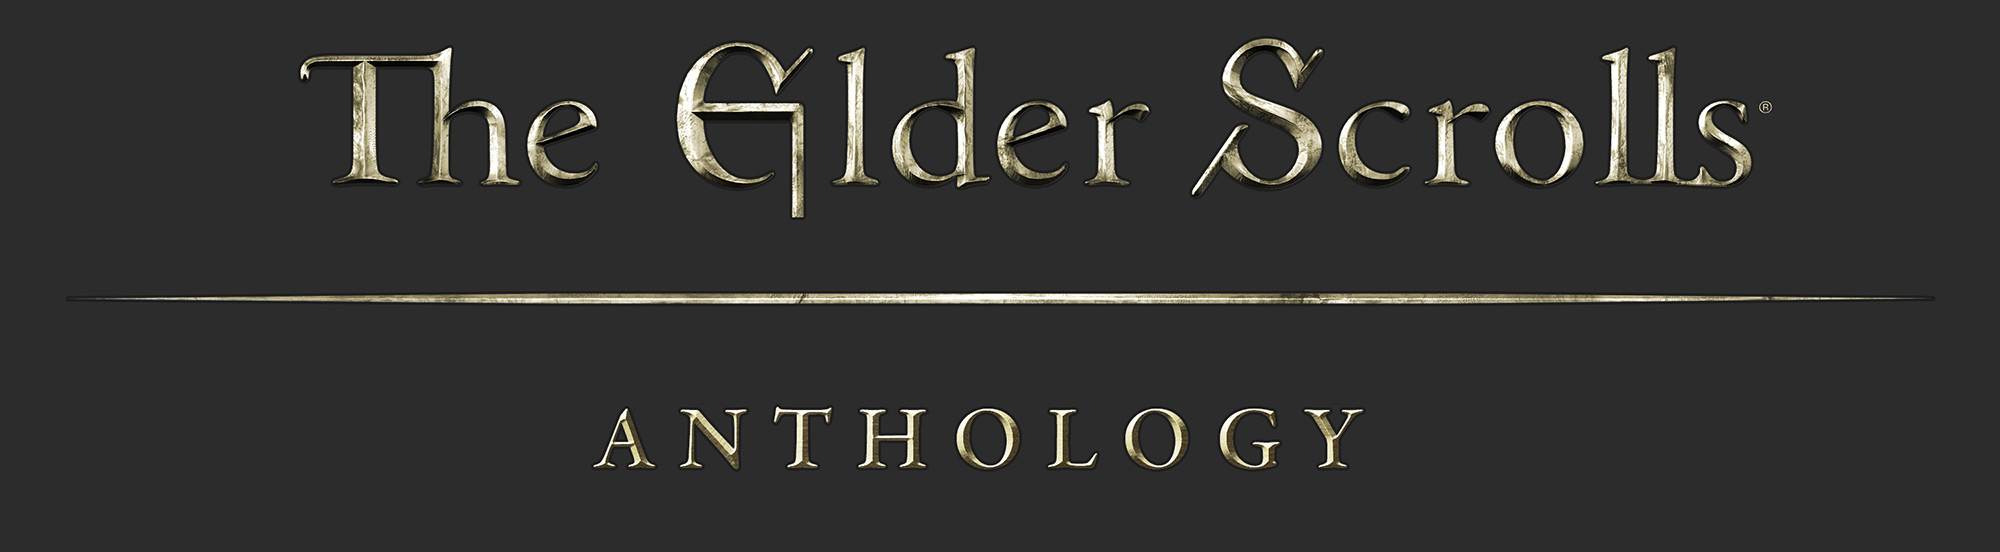 The Elder Scrolls Anthology Logo 001